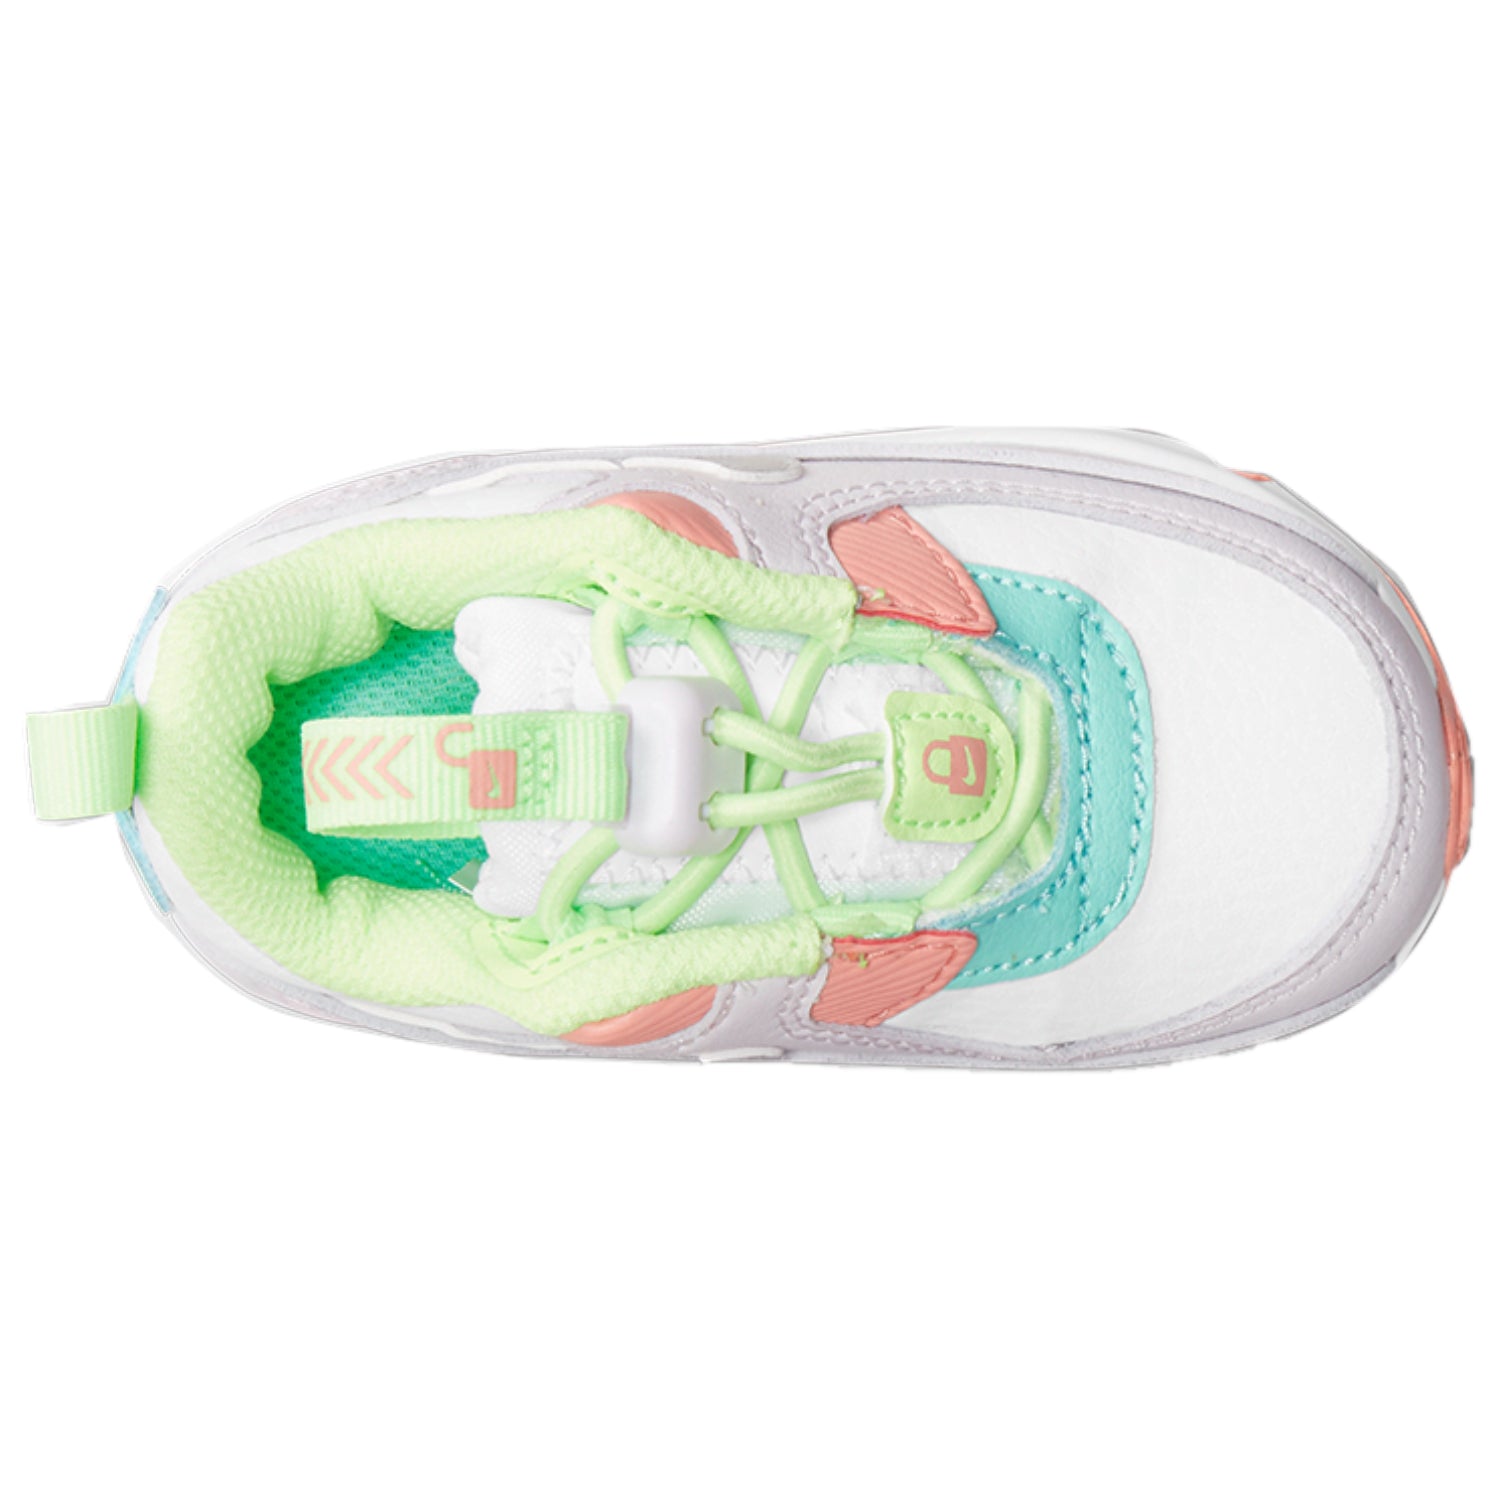 Nike Air Max 90 Toggle Toddlers Style : Cv0065-102